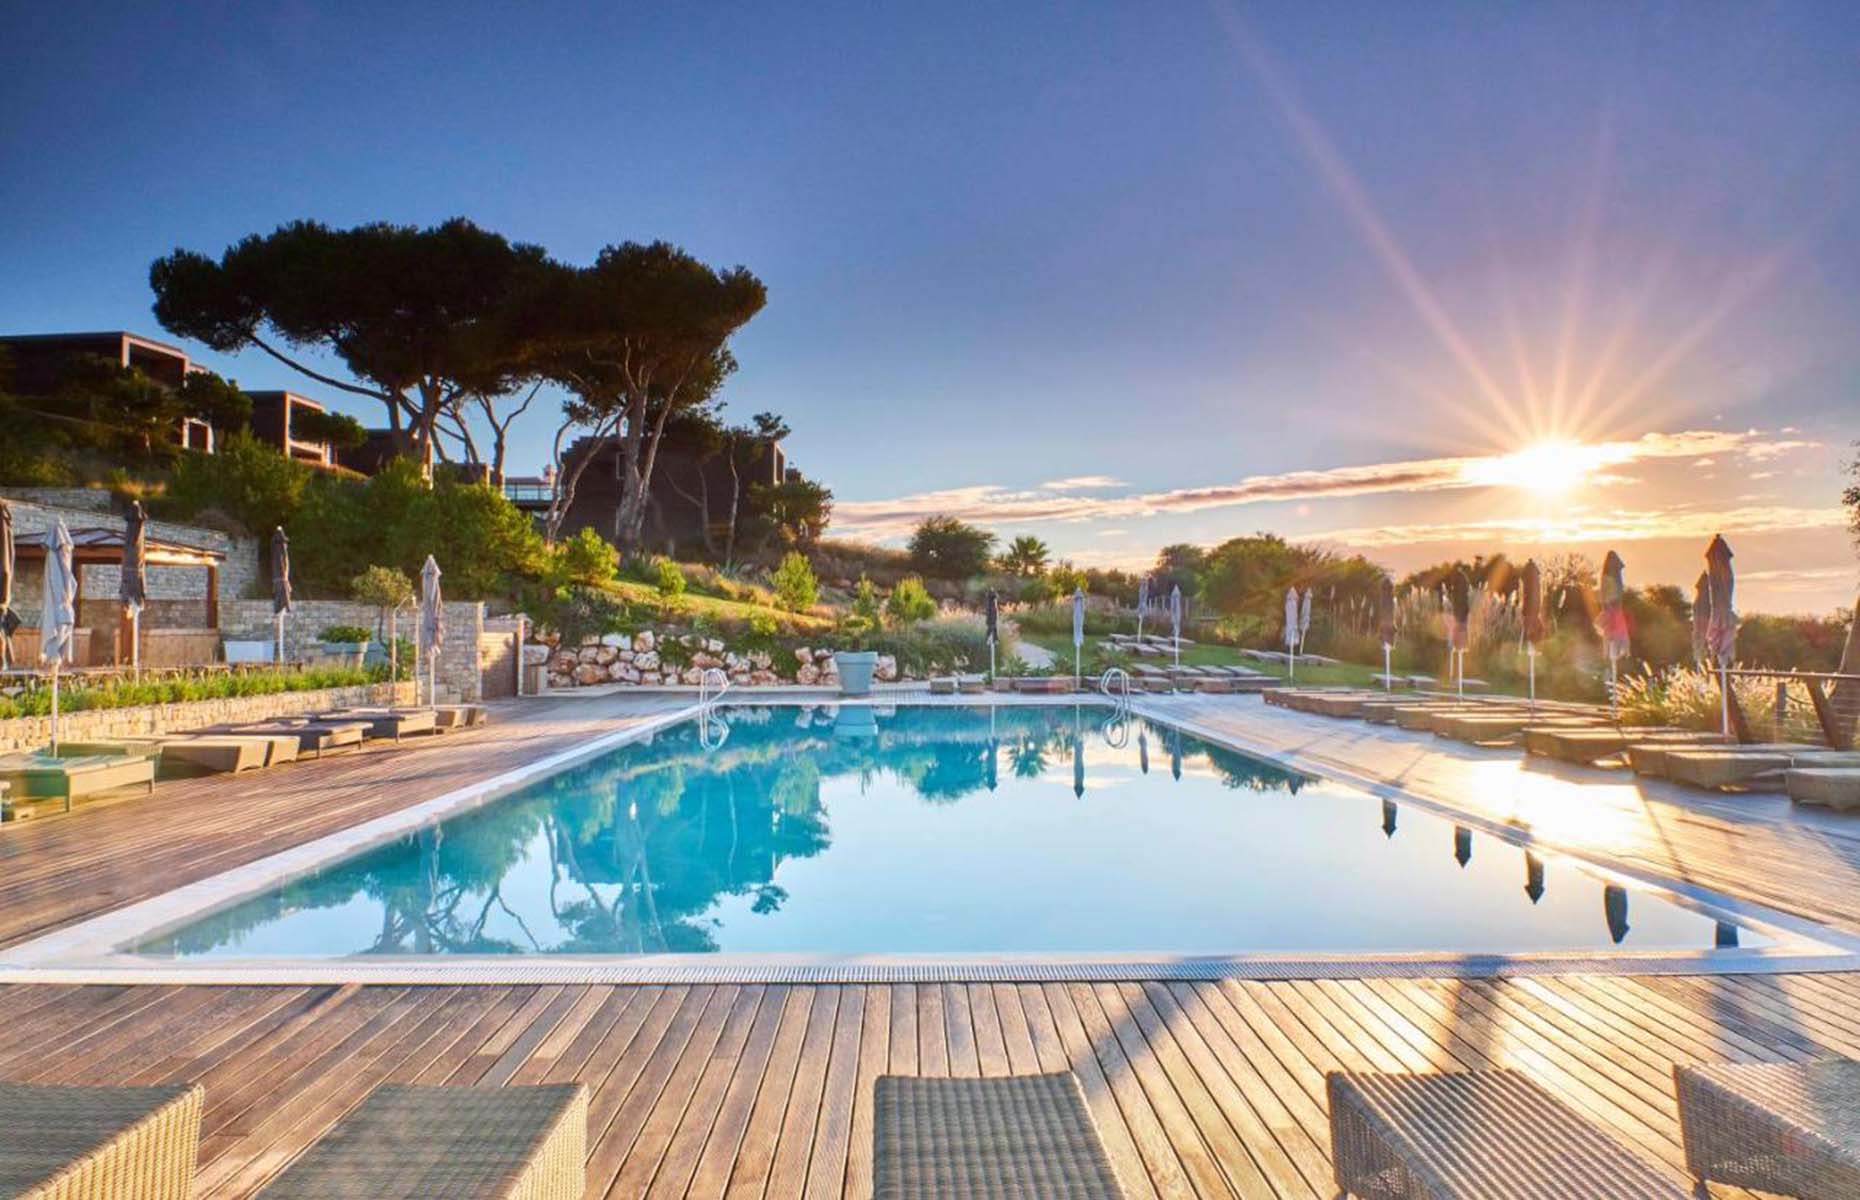 Martinhal hotel in the Algarve (Image: Courtesy of Martinhal)